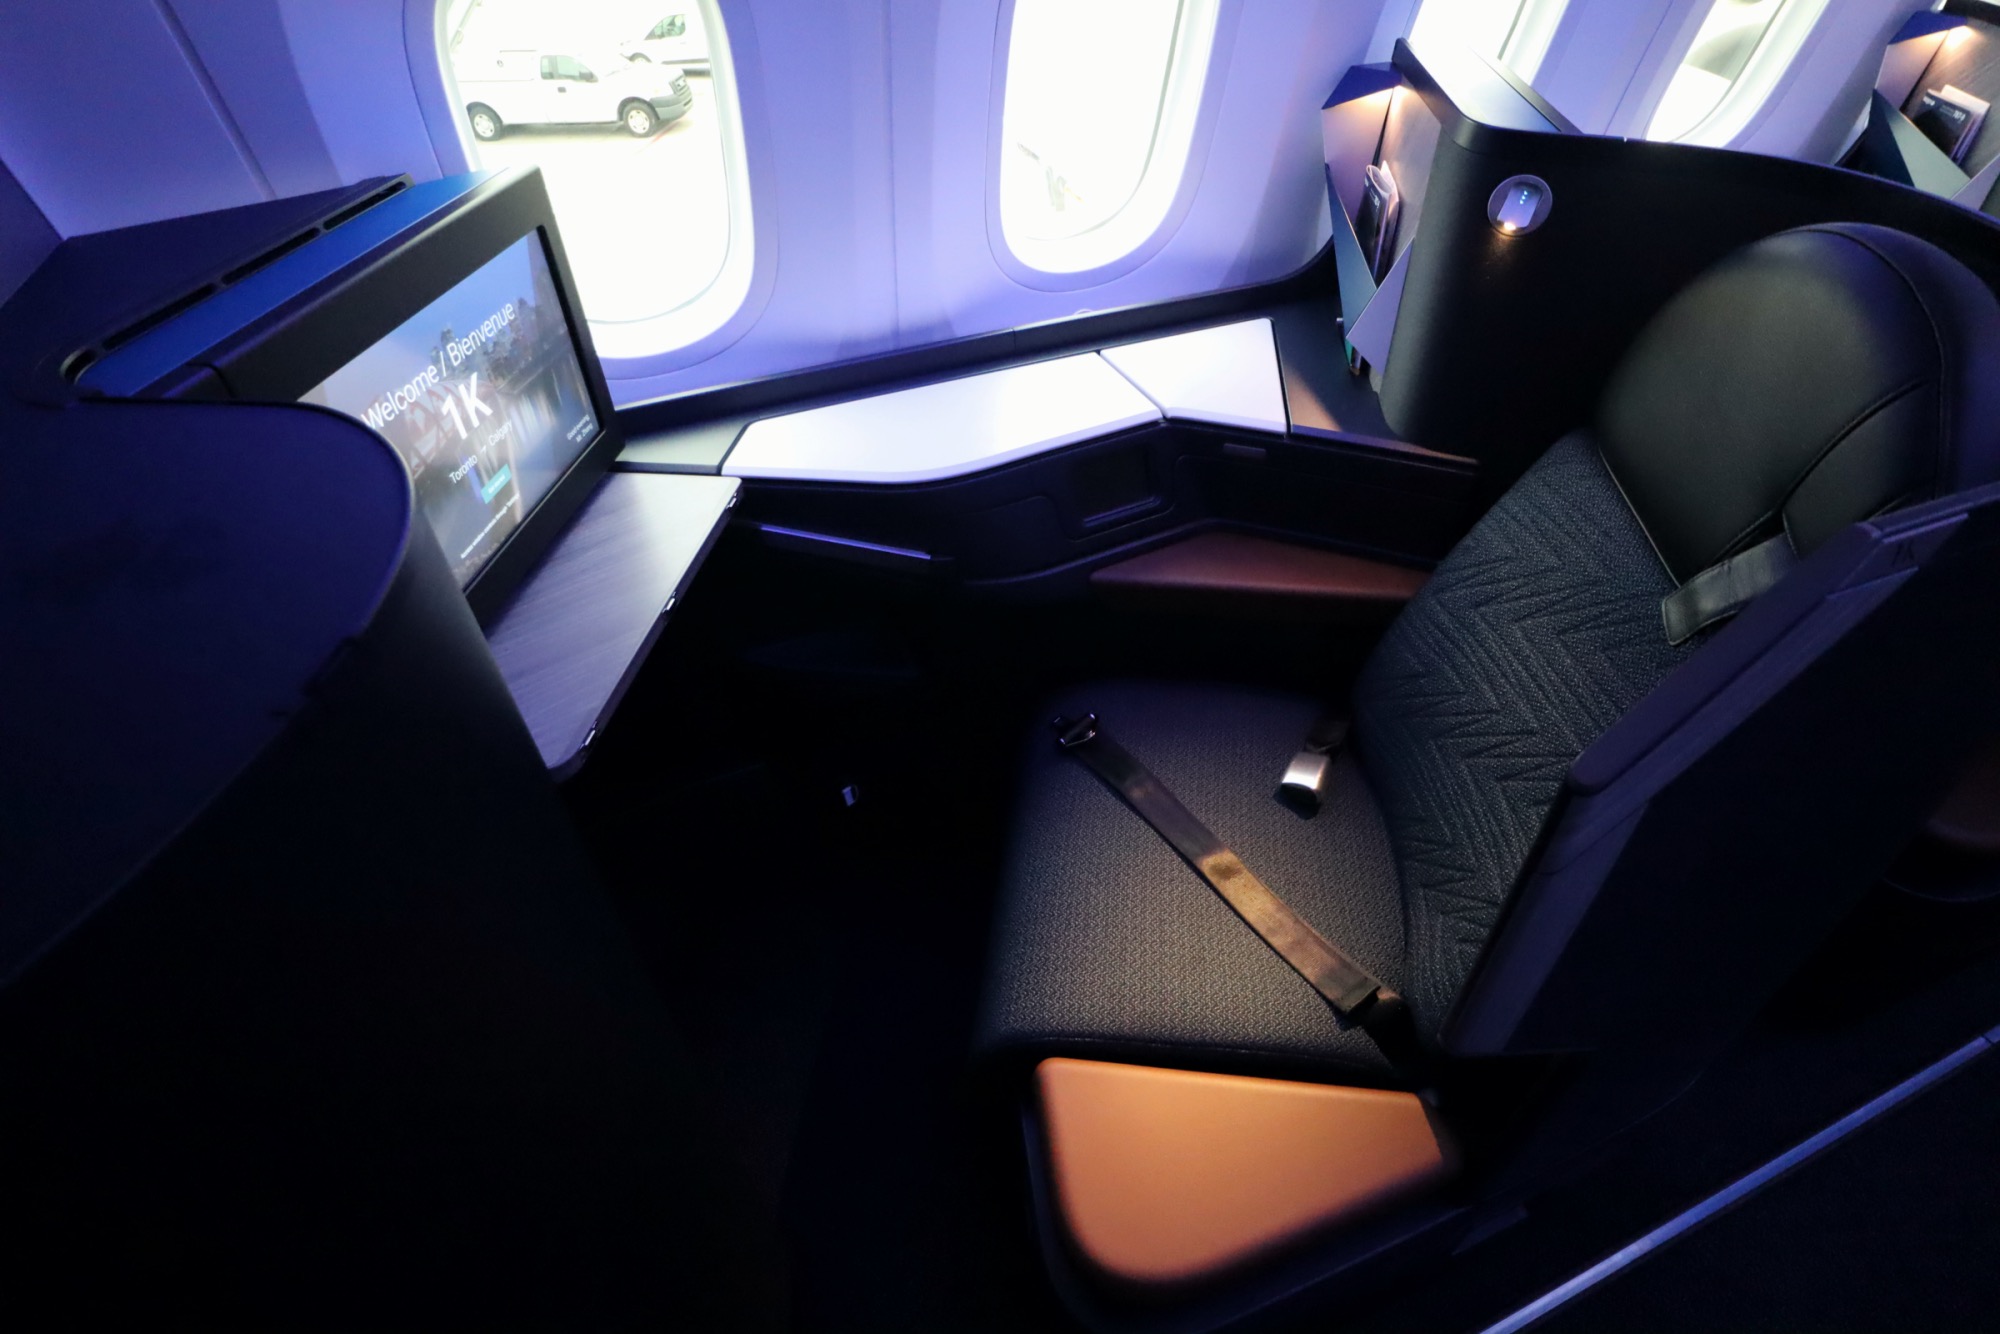 WestJet 787 business class